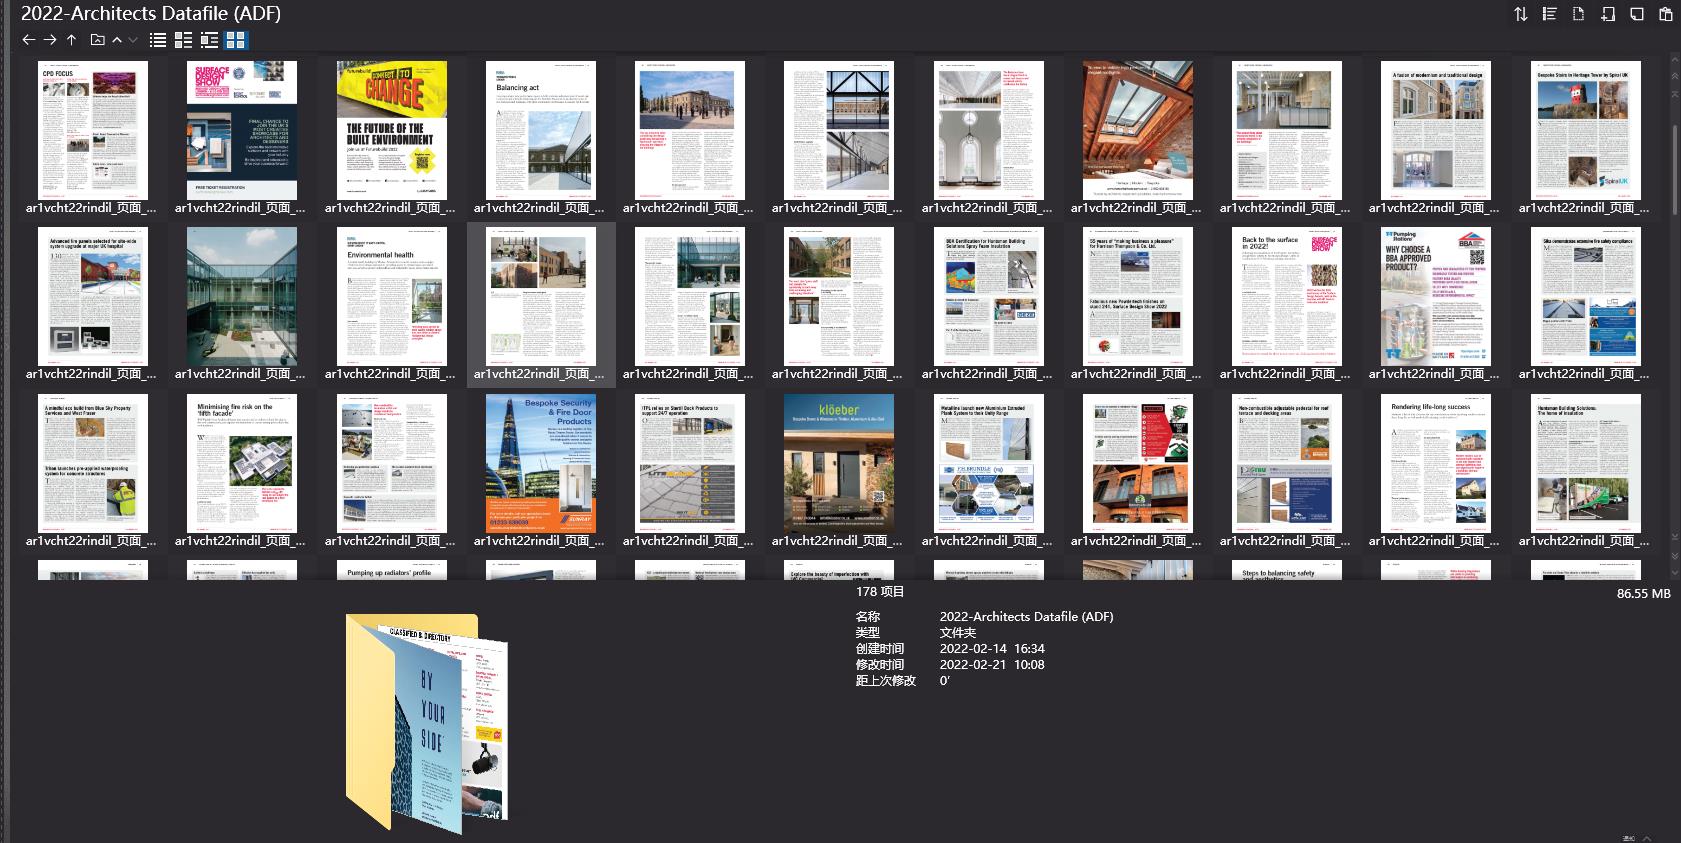 Architects Datafile (ADF),ADF建筑杂志,建筑设计电子杂志,杂志下载,Architects Datafile,ADF